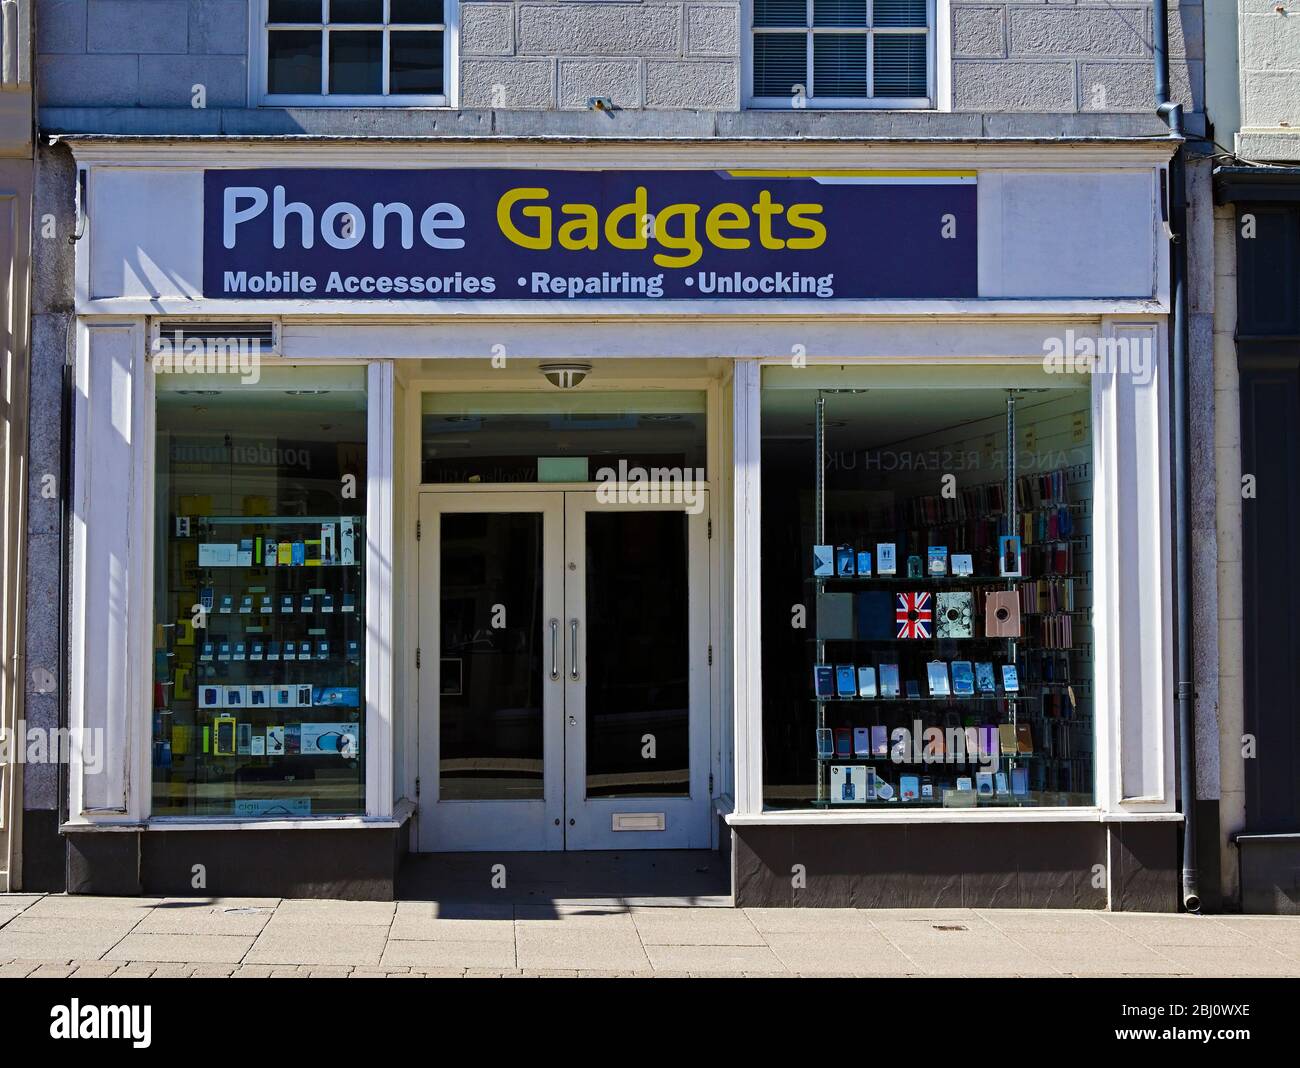 Shop front. Phone Gadgets, Mobile Accessories, Repairing, Unlocking. Stricklandgate, Kendal, Cumbria, England, United Kingdom, Europe. Stock Photo